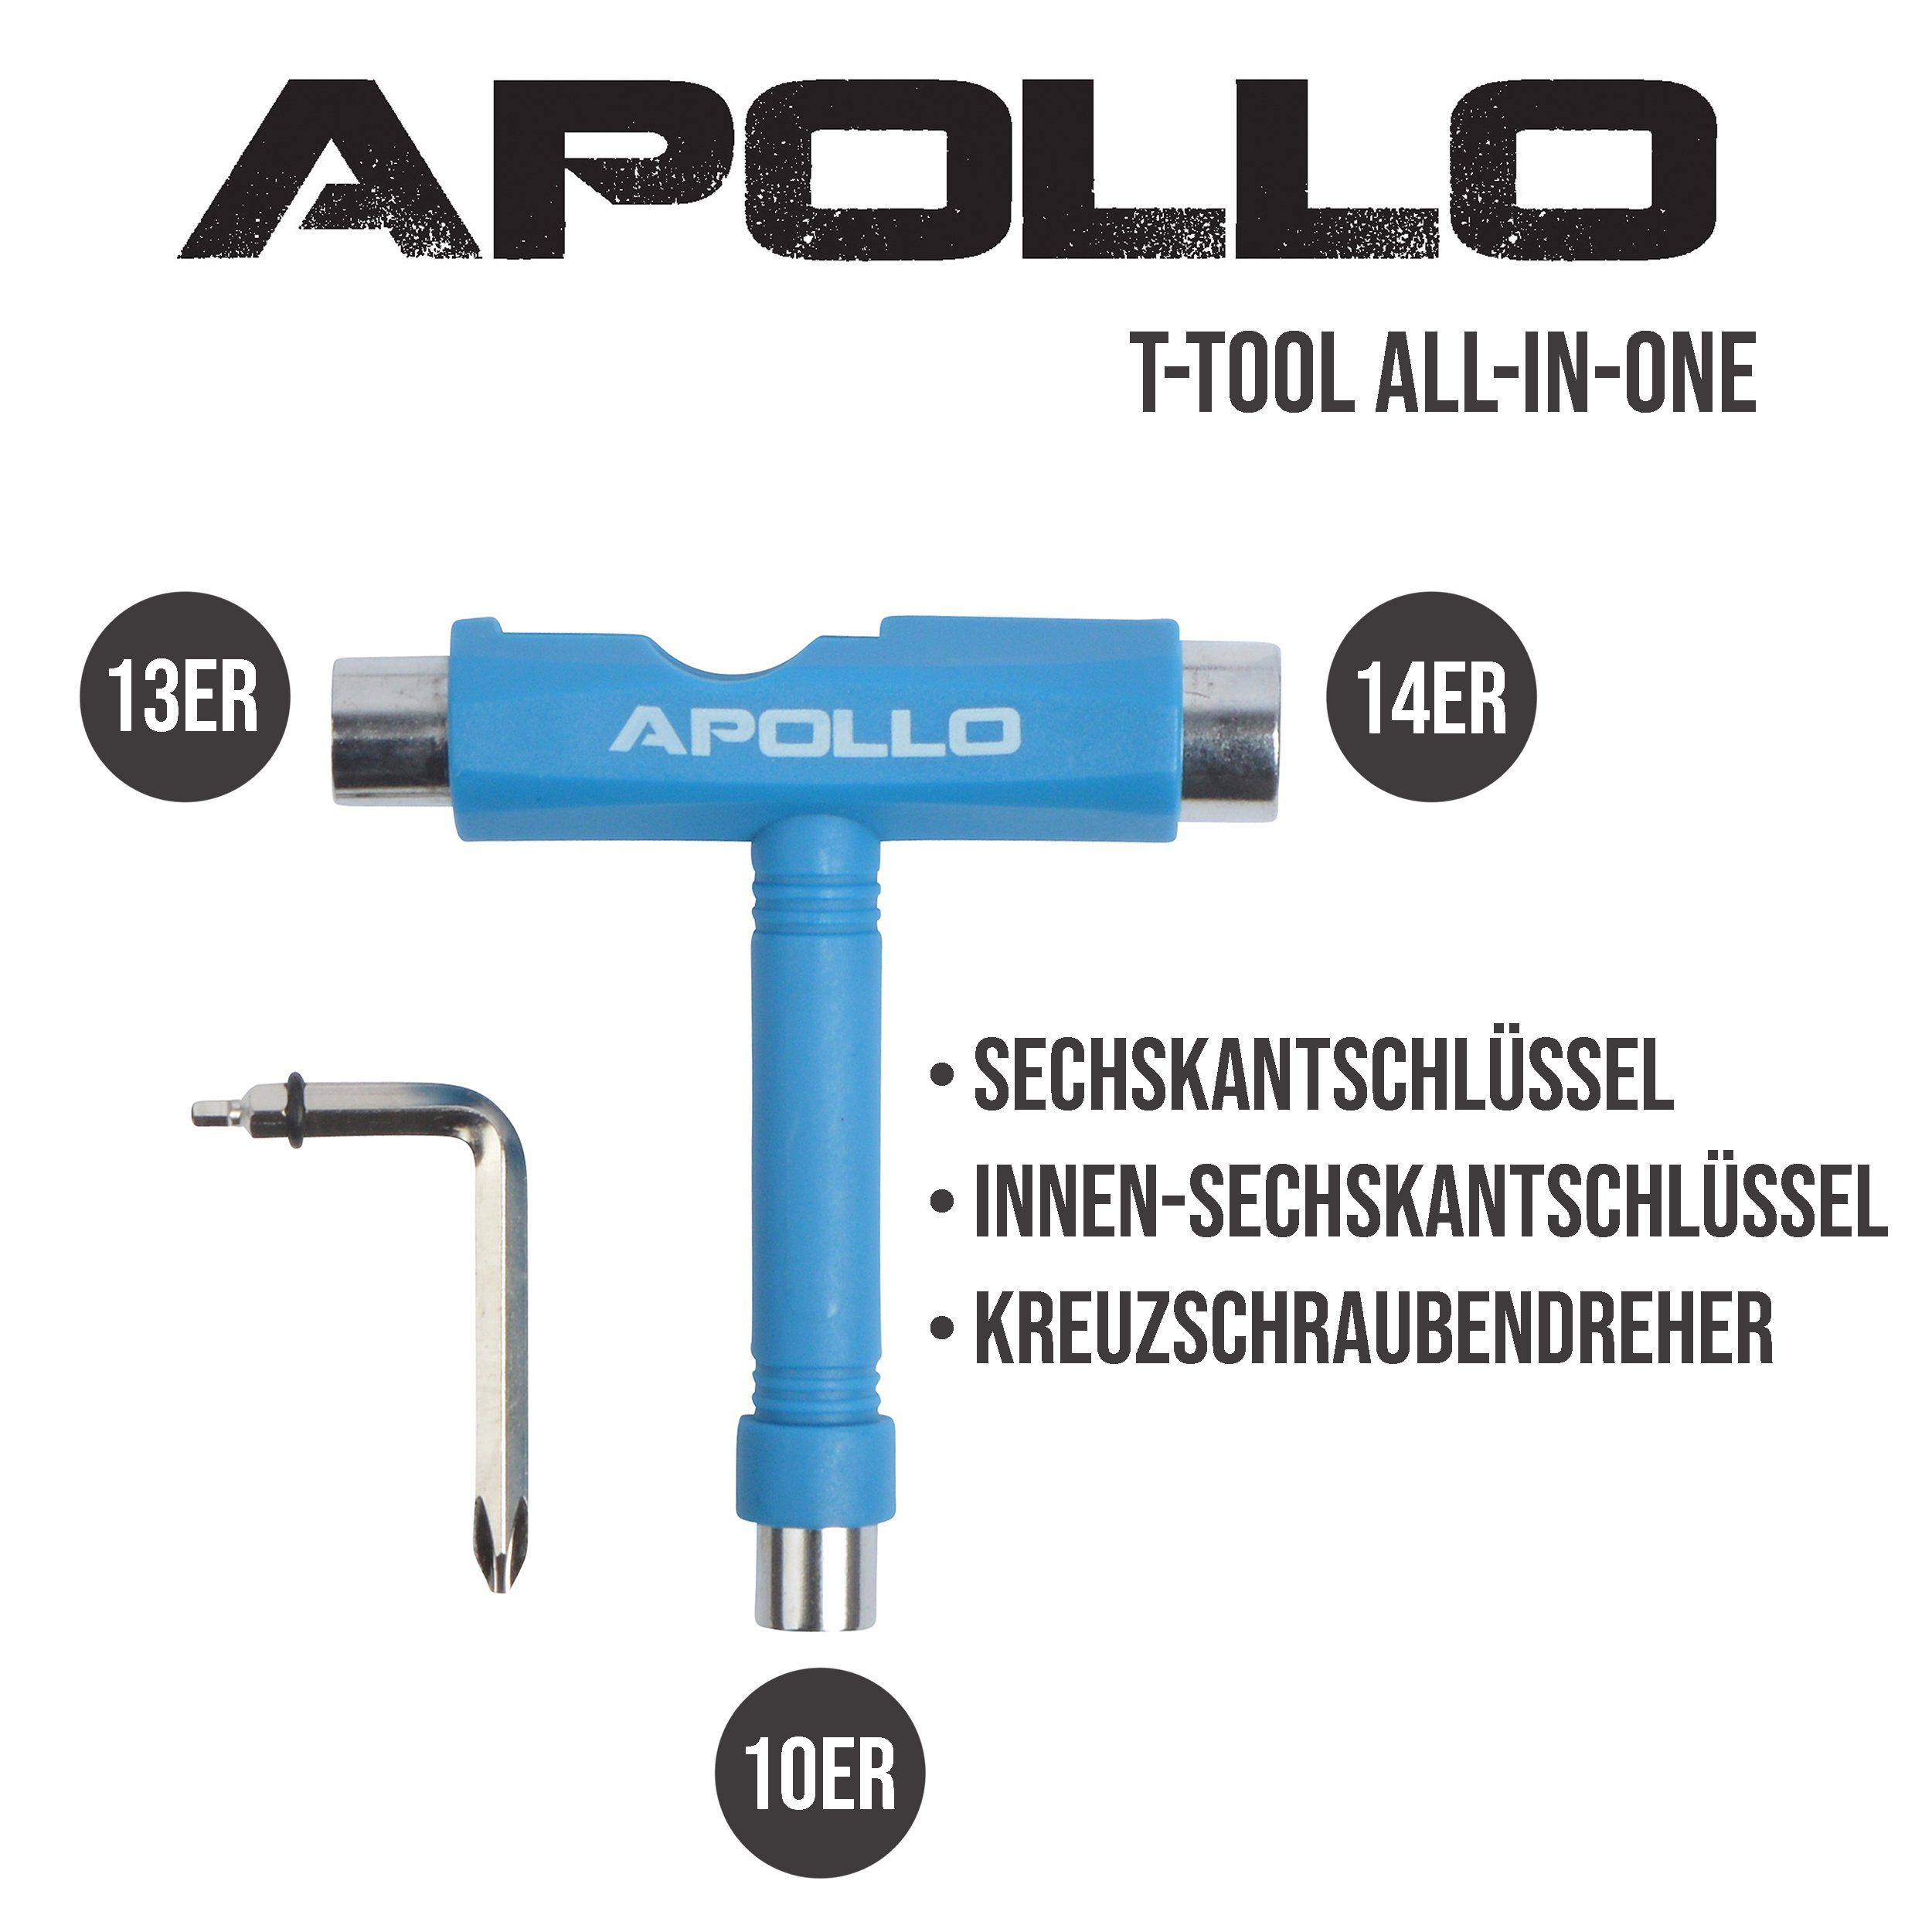 Tool Apollo Multifunktions Blau All-In-One - Skateboard, Schraubenschlüssel Longboard für Sechskantschlüssel, Skateboard Scooter, T-Tool